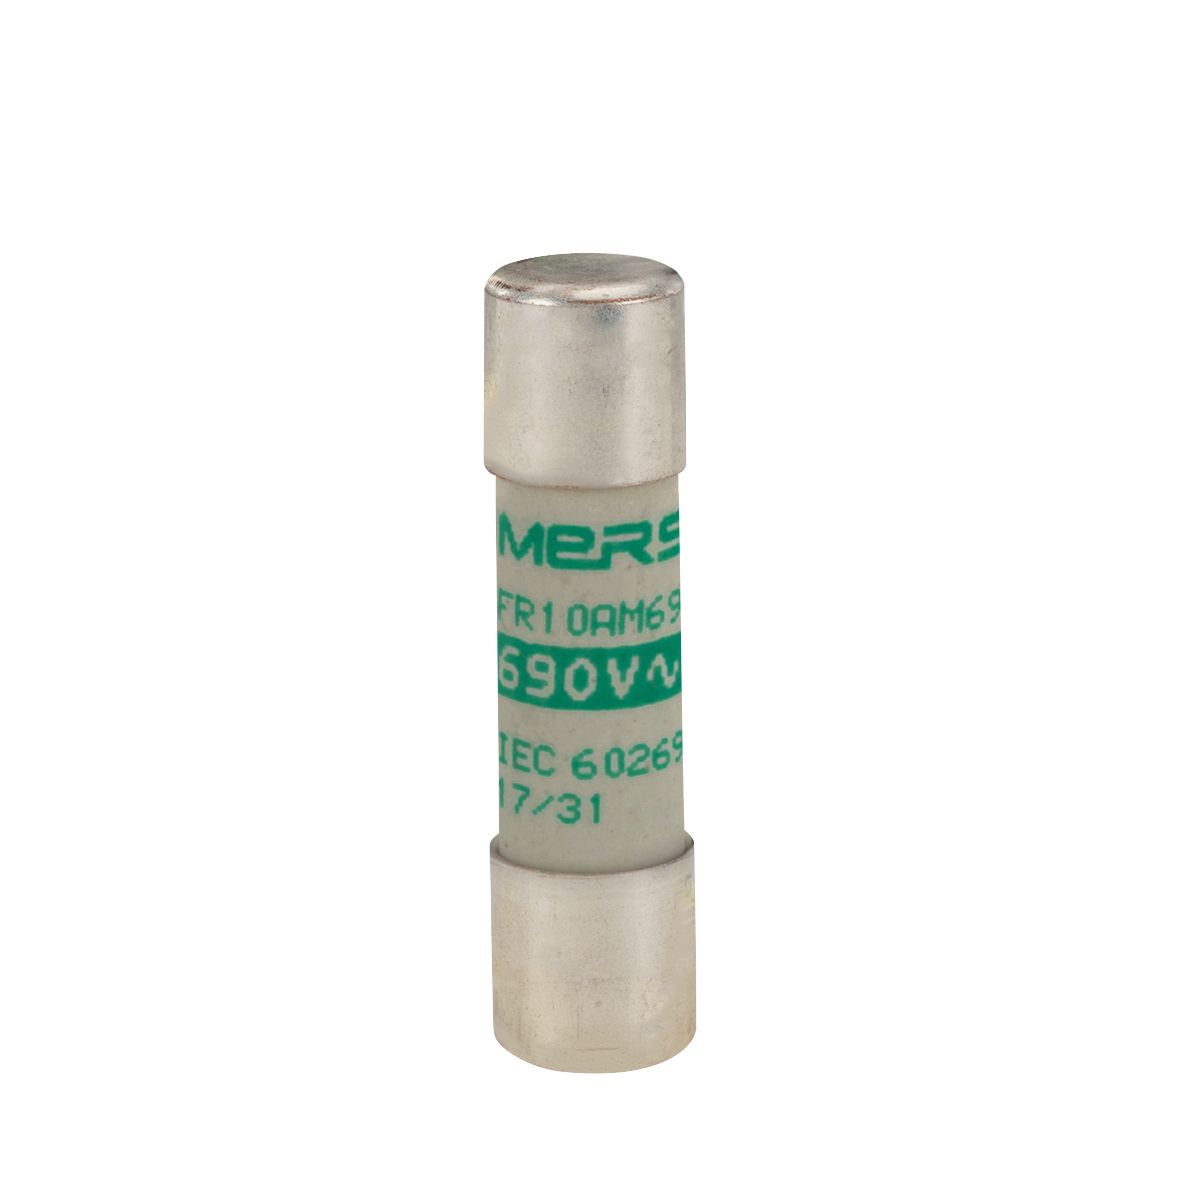 K302781 - Cylindrical fuse-link aM 690VAC 10.3x38, 4A